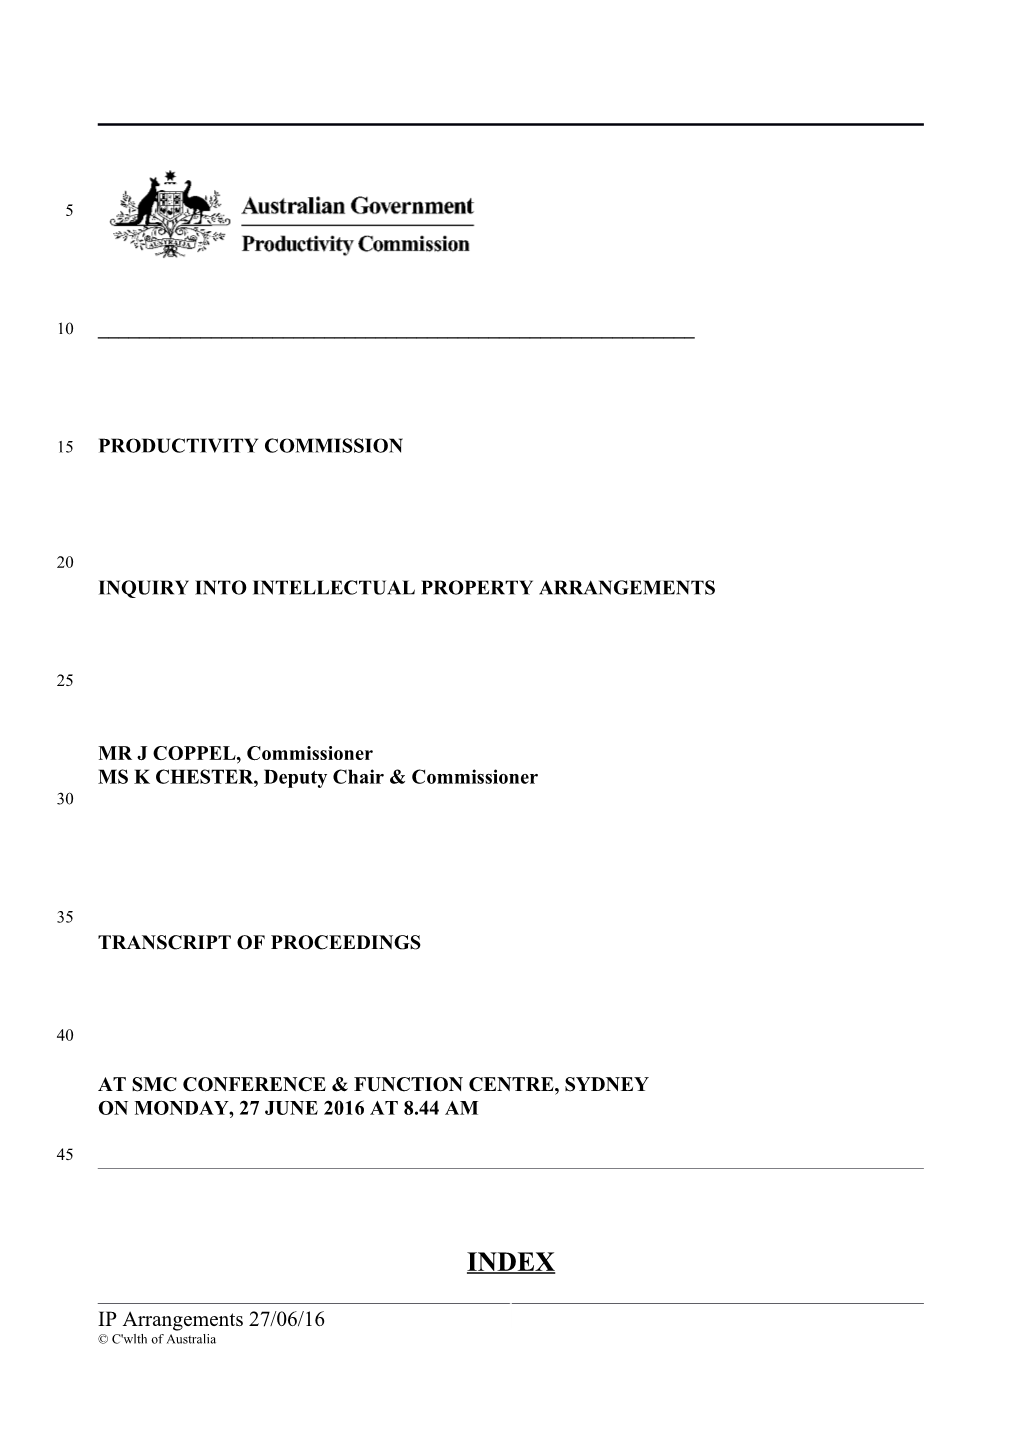 27 June 2016 - Sydney Public Hearing Transcript - Intellectual Property Arrangements